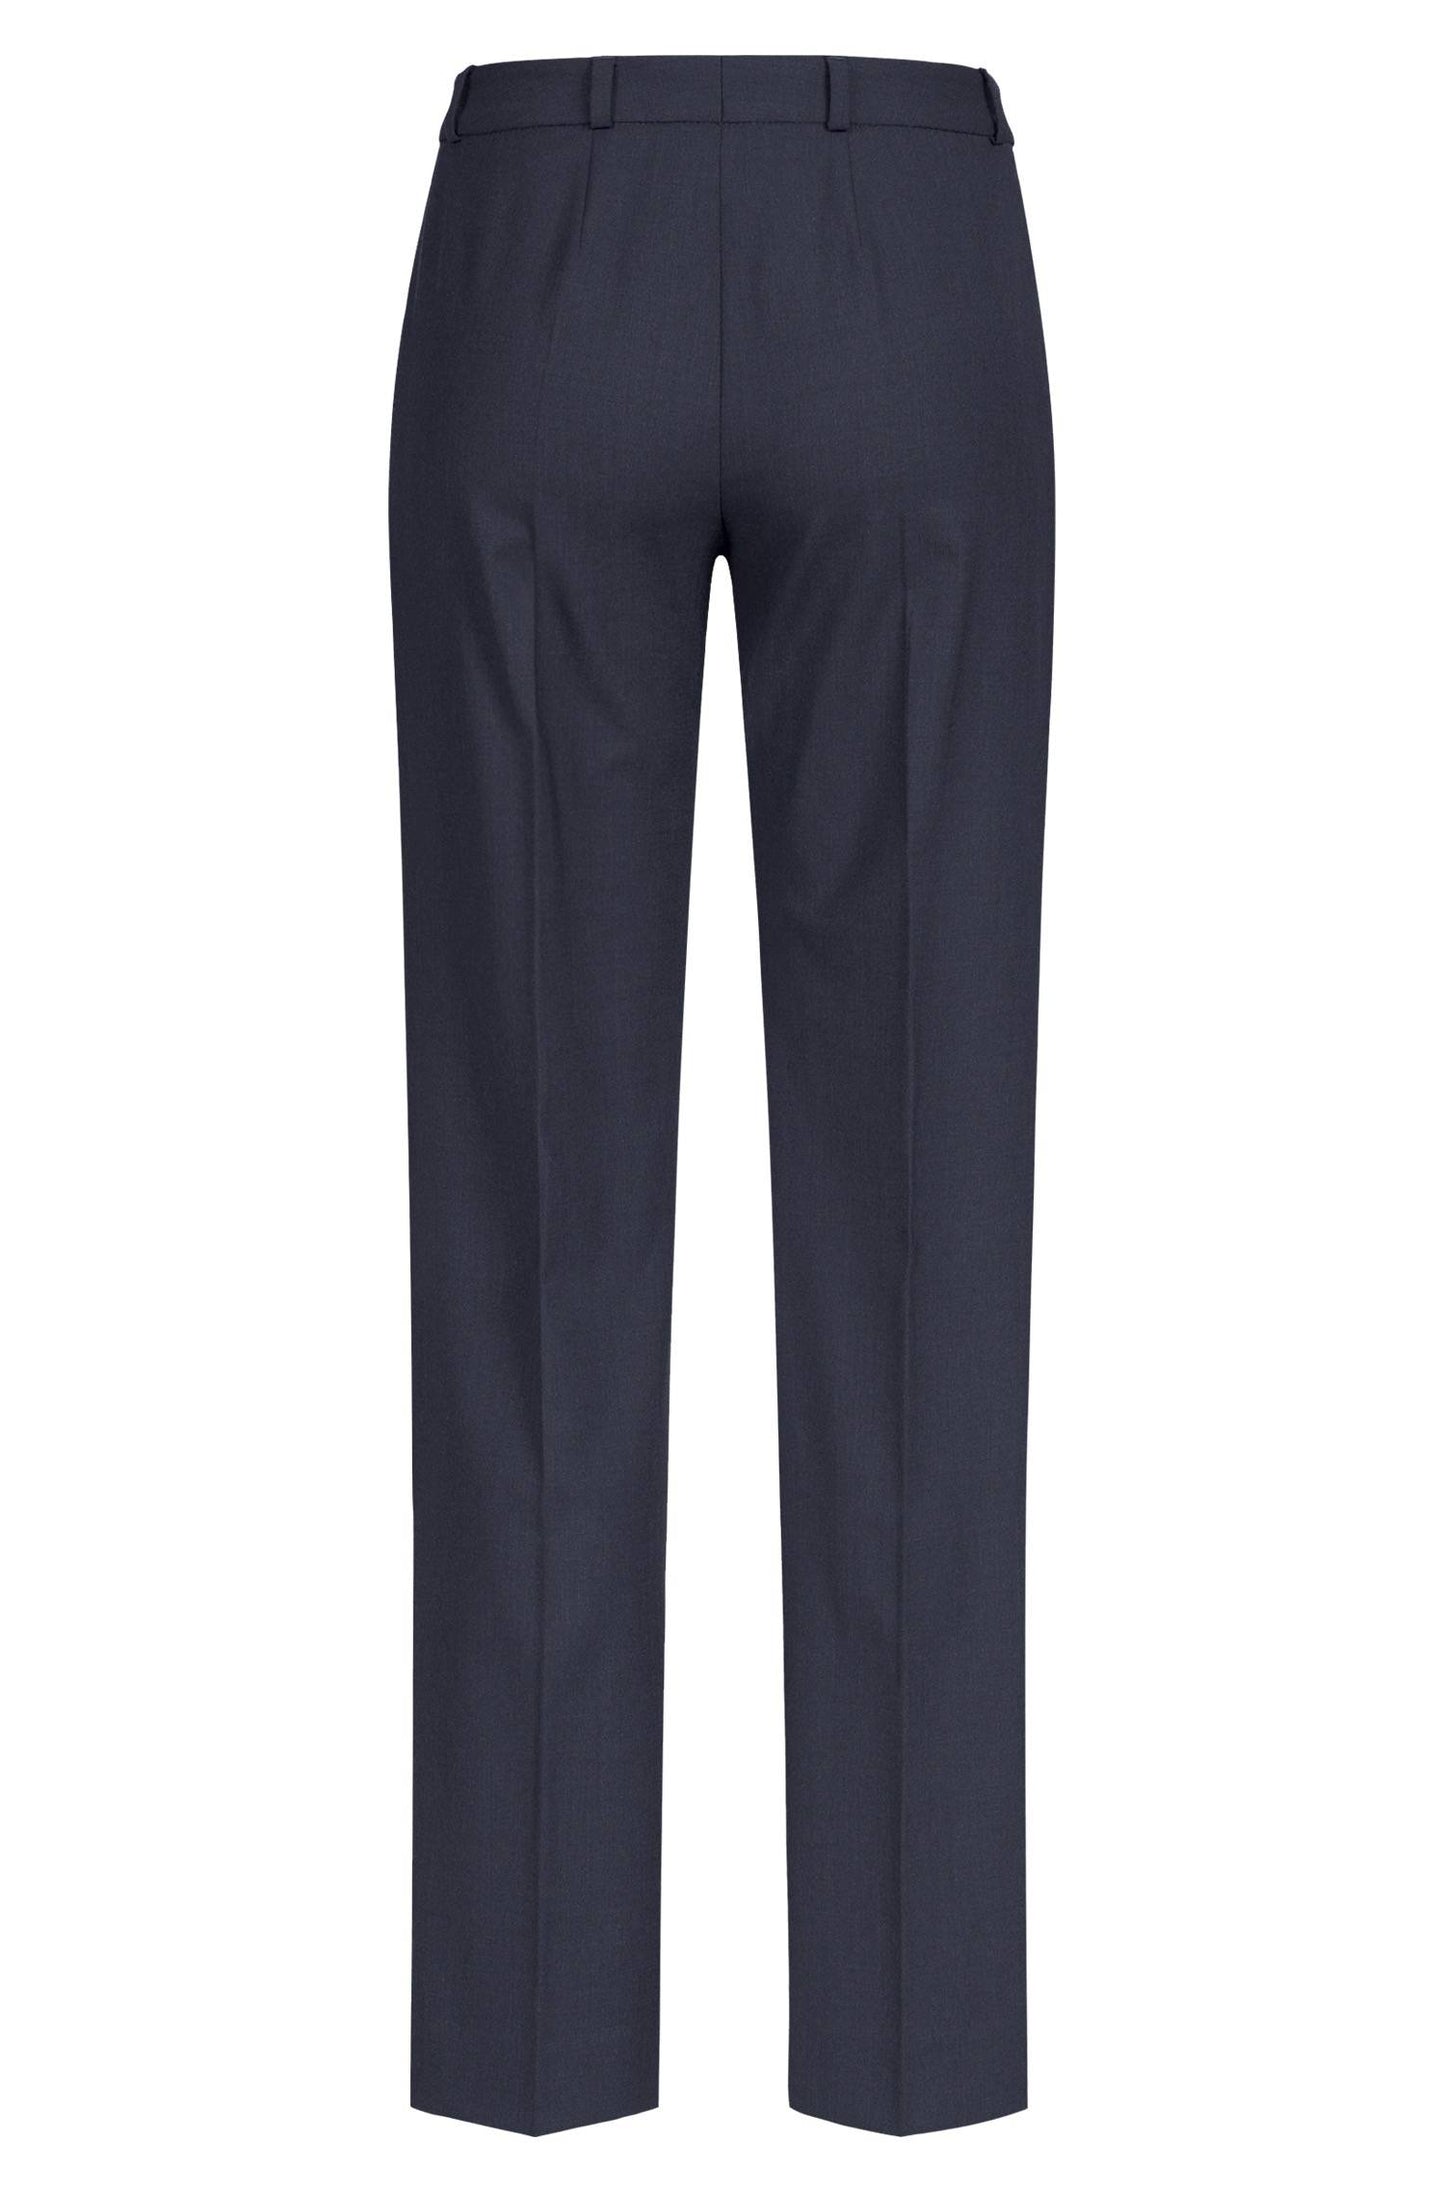 Greiff dames pantalon CF Premium marineblauw maat 24 (korte lengtemaat)